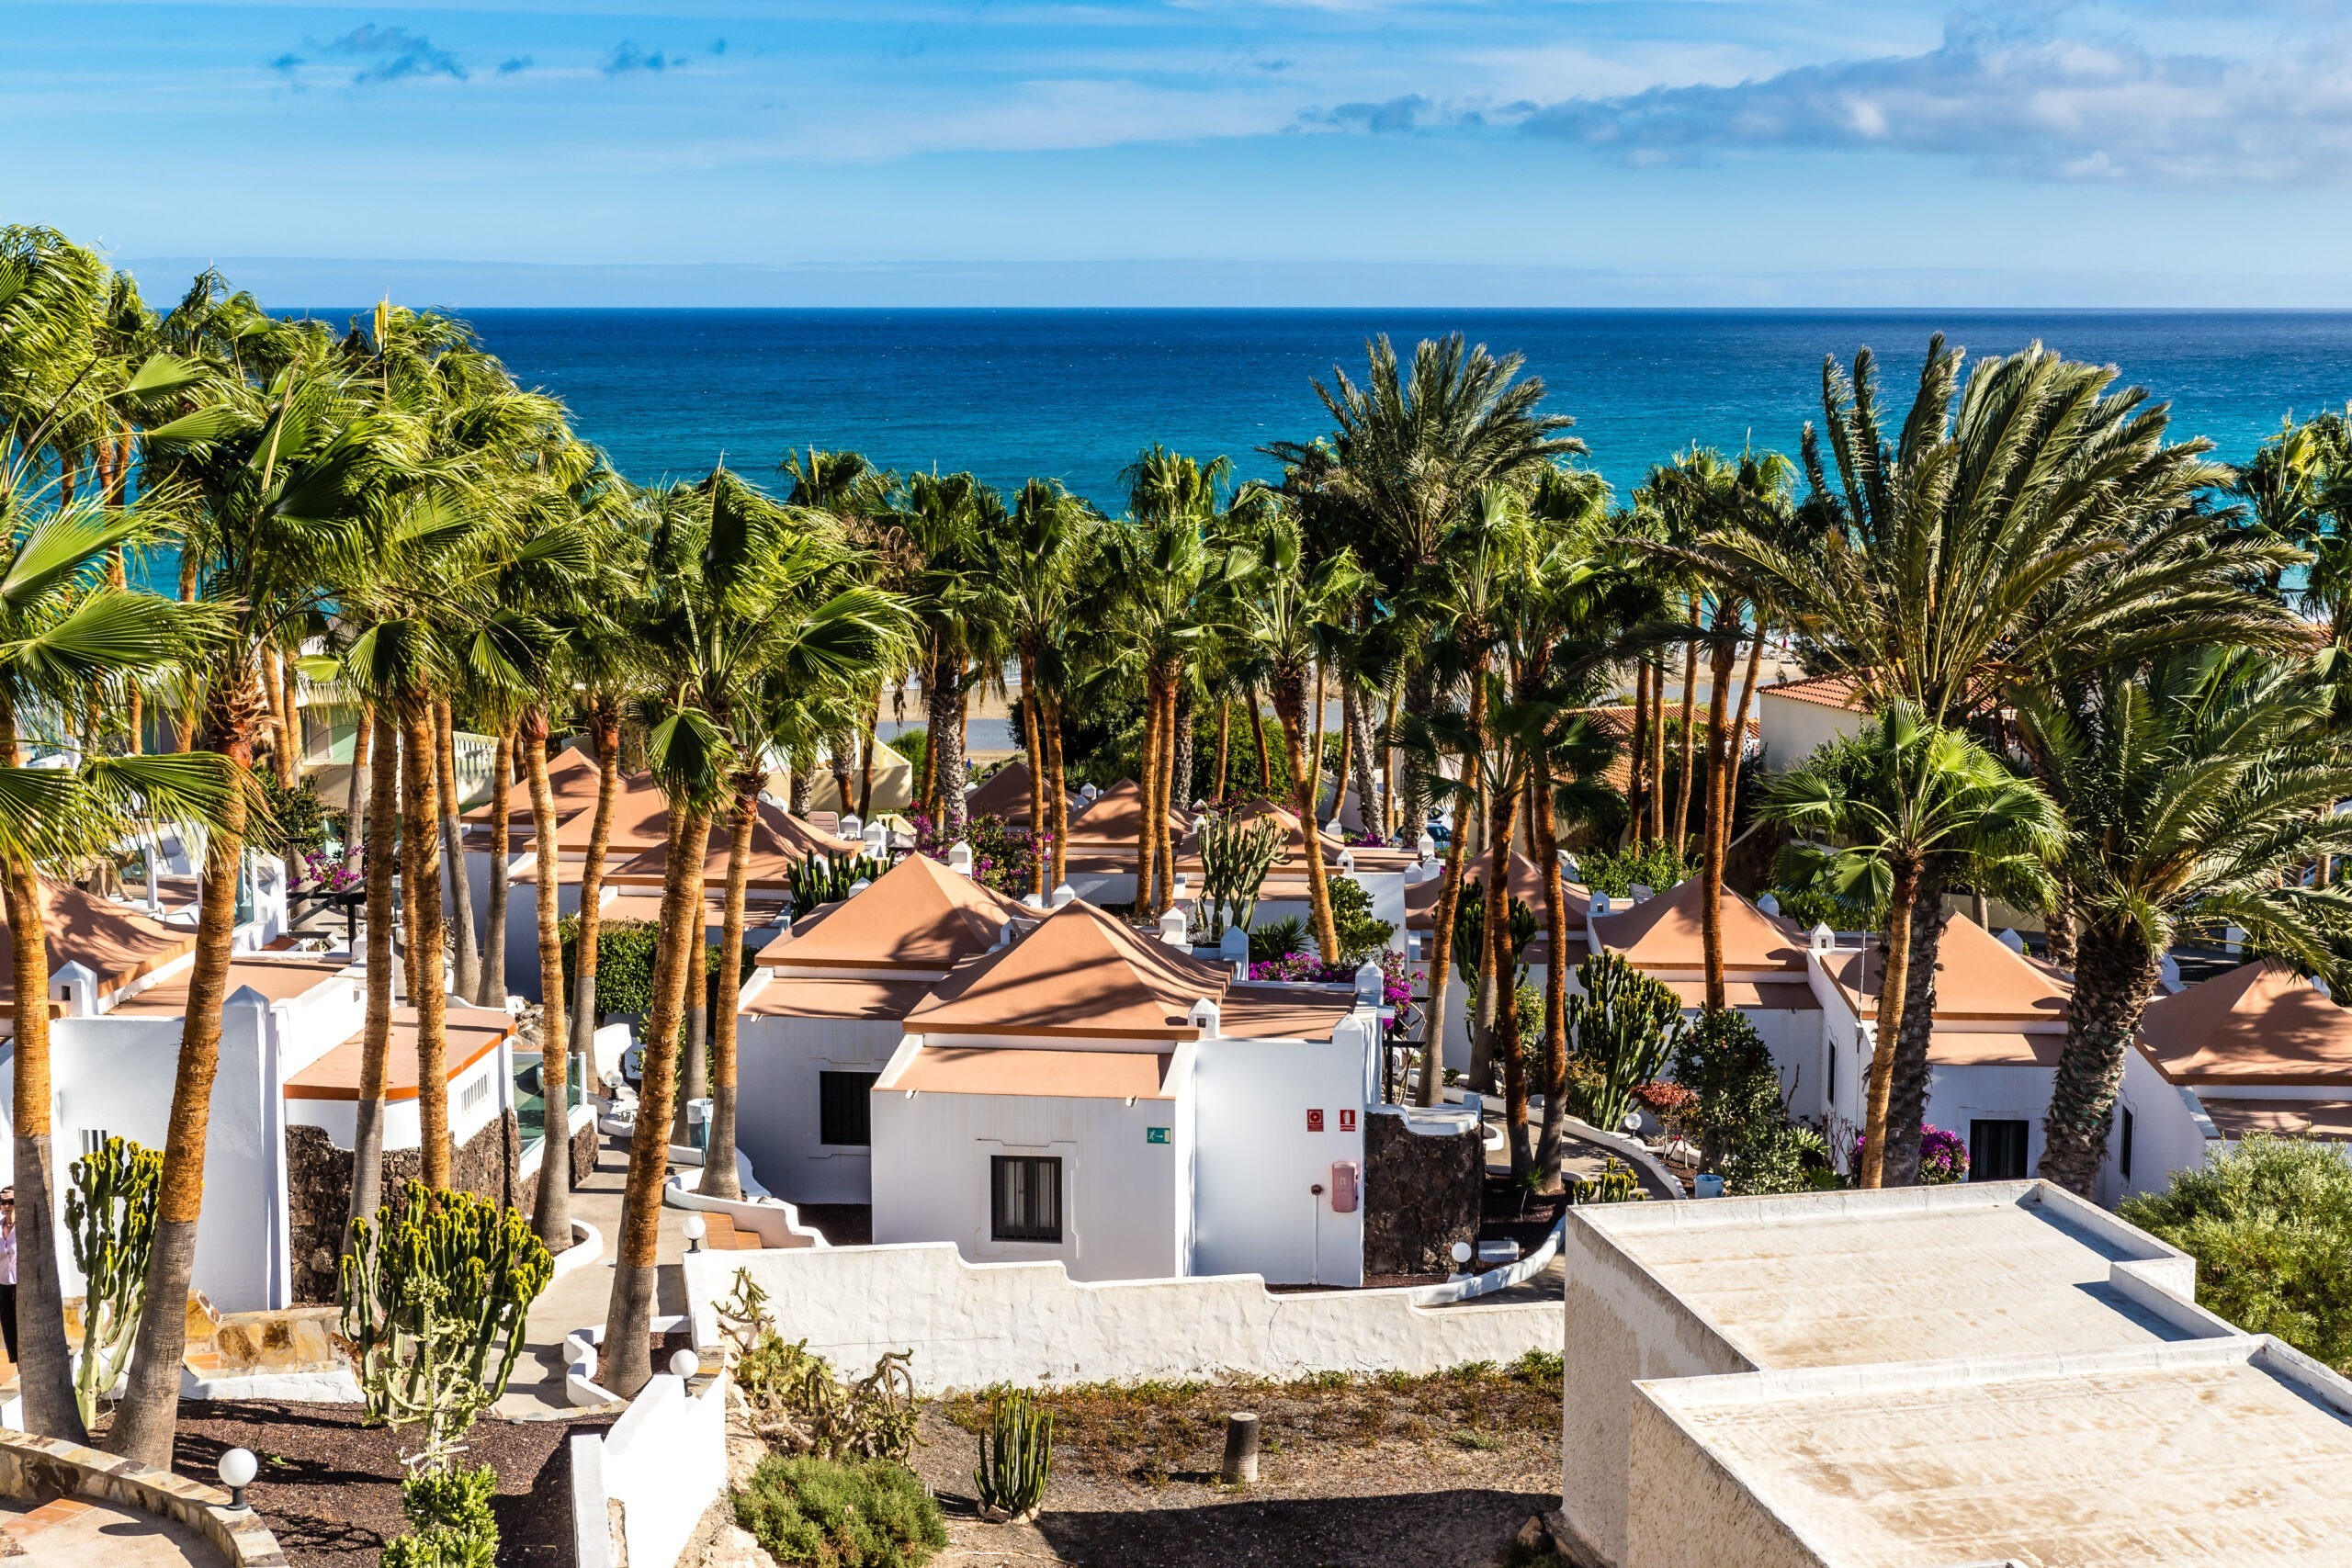 Luxury Bungalows On Costa Calma - Fuerteventura